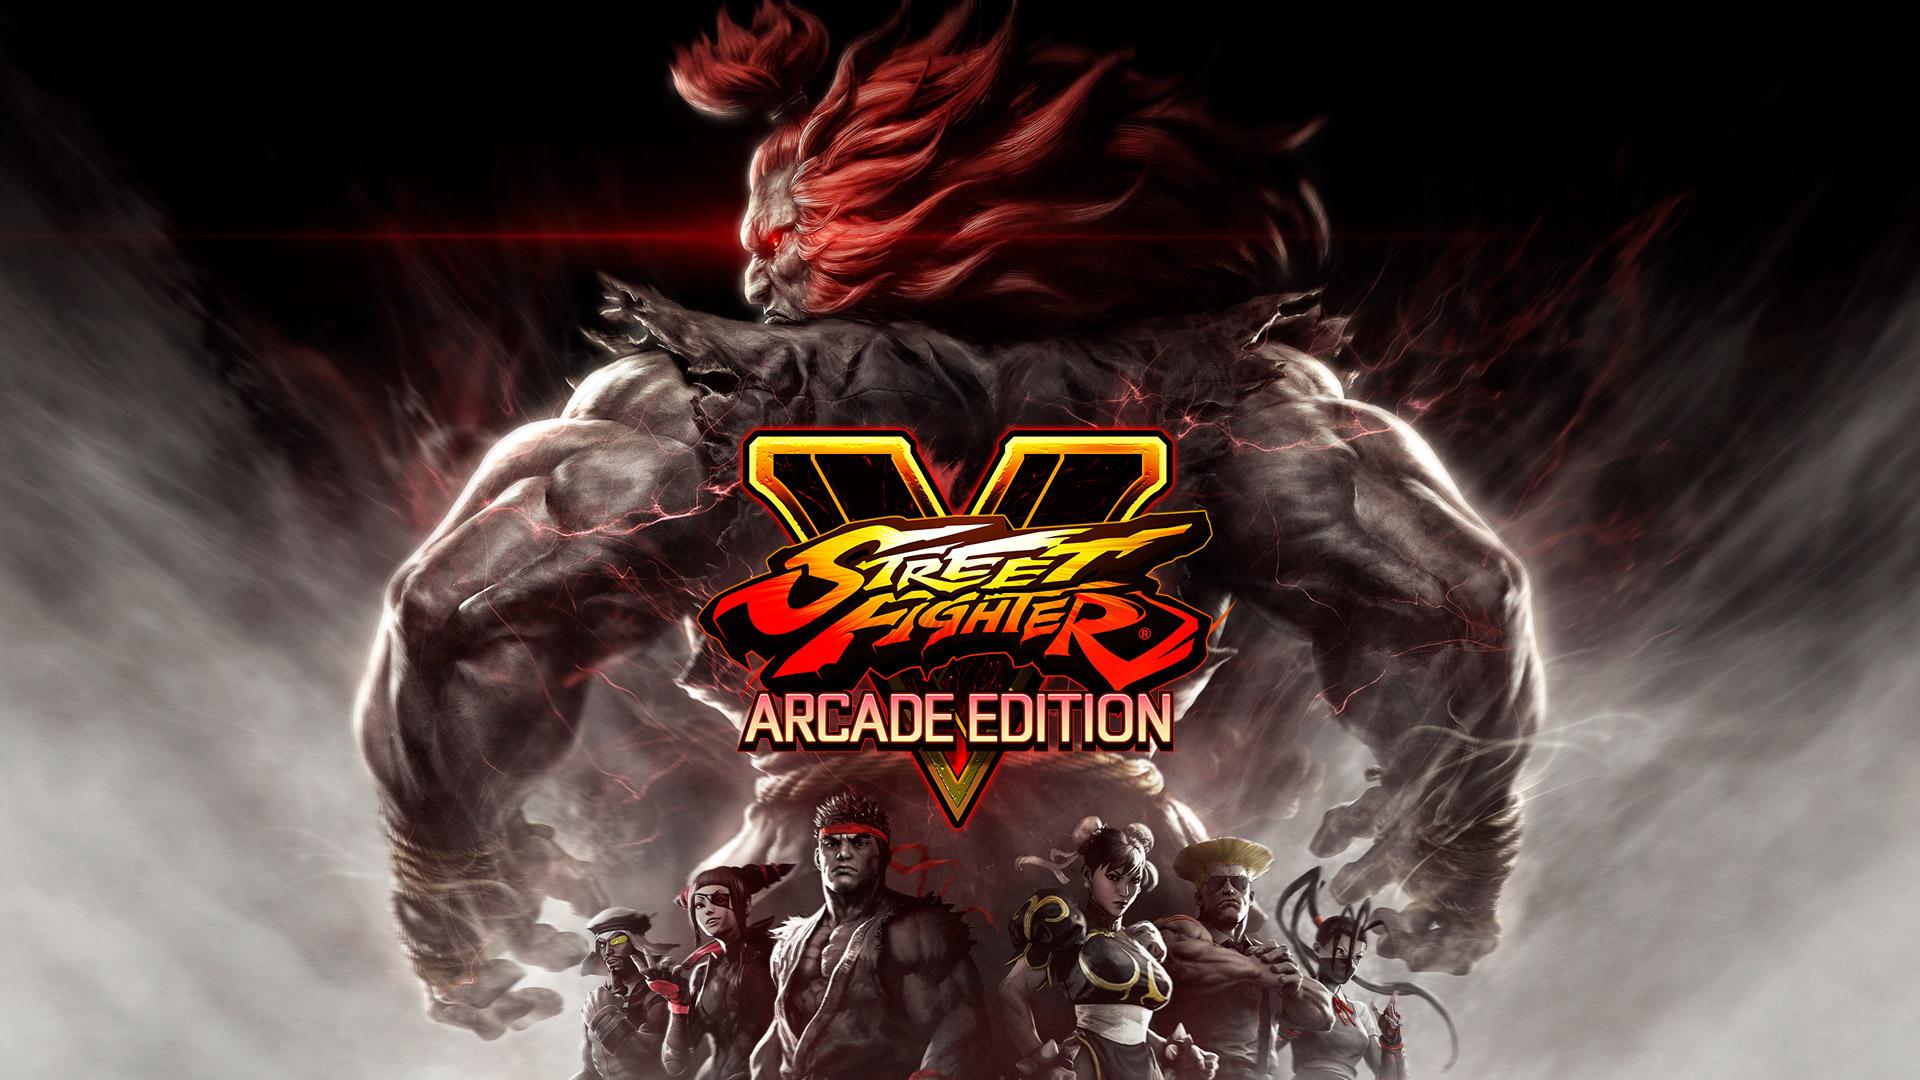 Arcade Edition Wallpaper from Street Fighter V: Arcade Edition